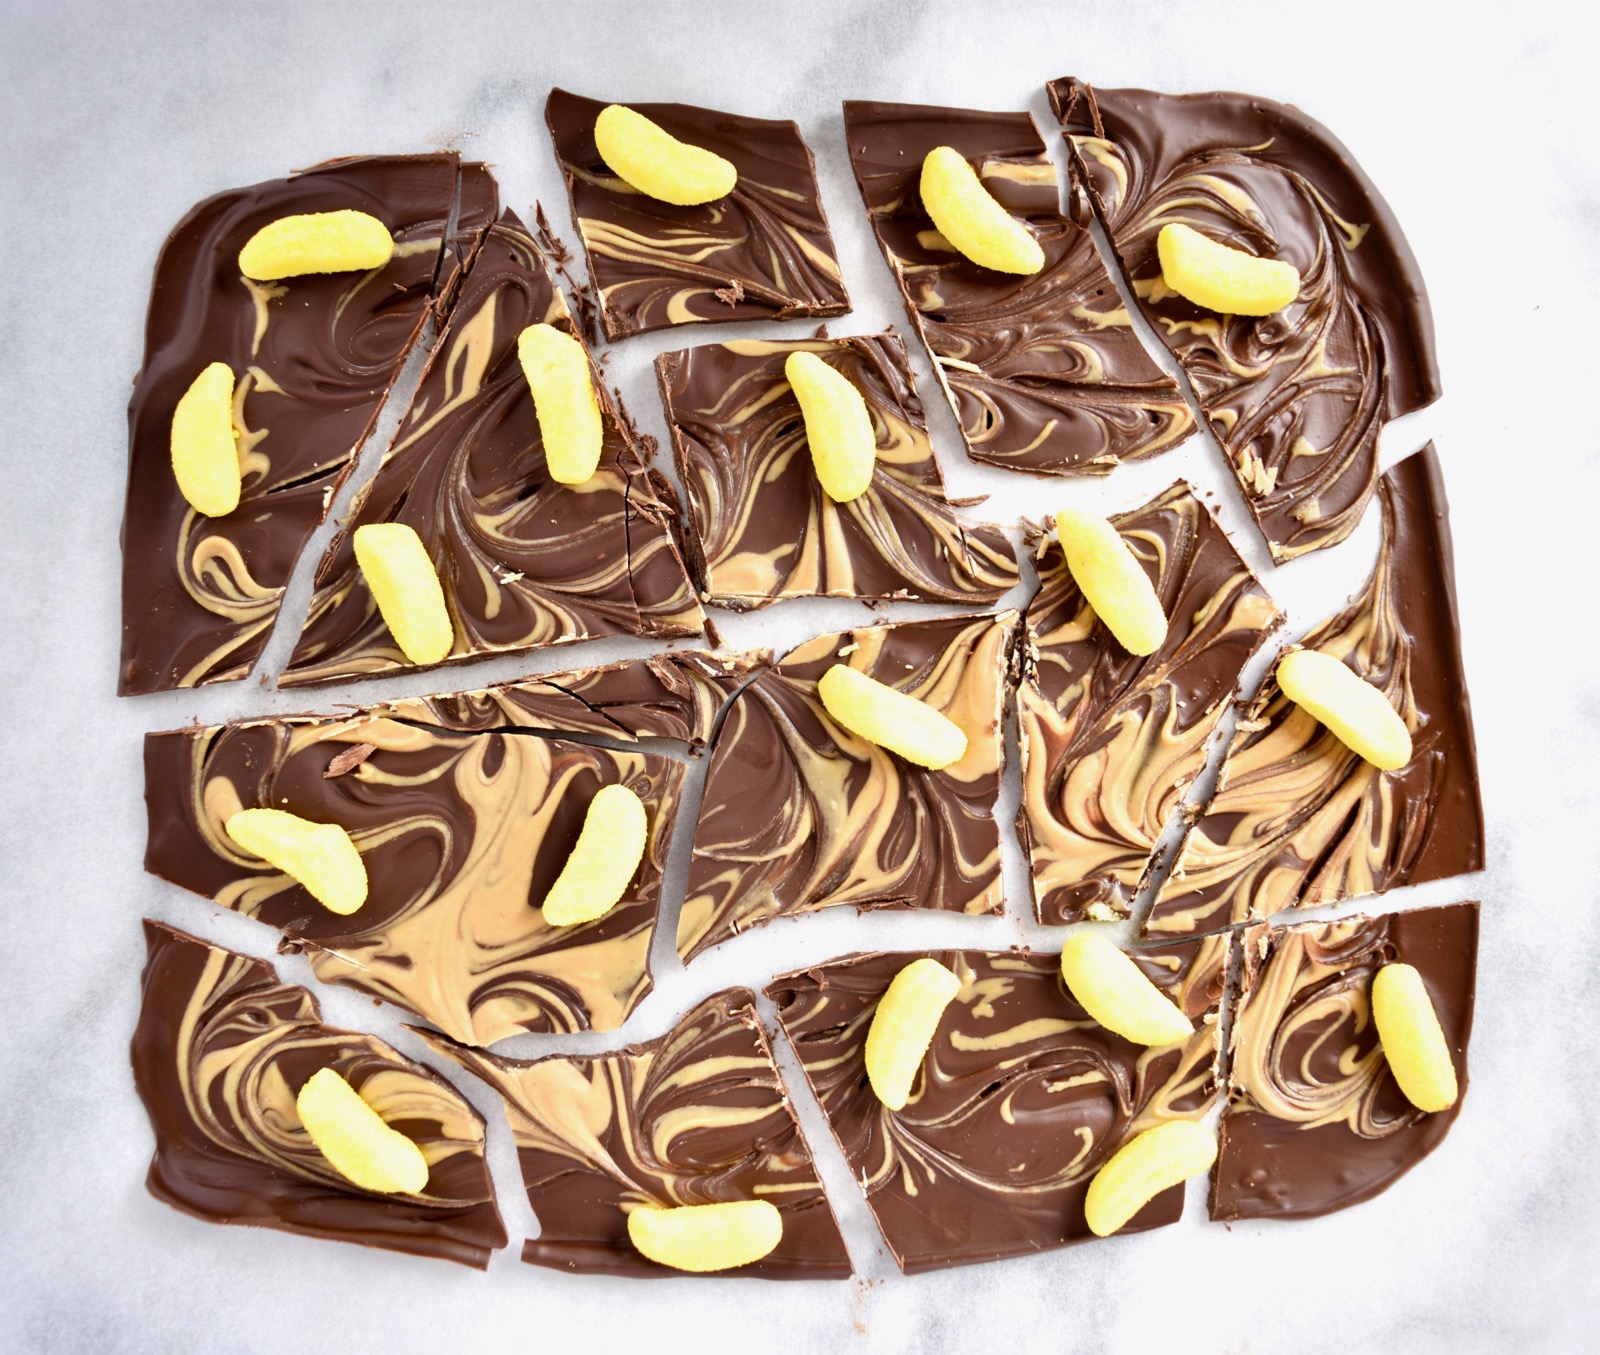 Chocolate PB Banana Candy Recipe